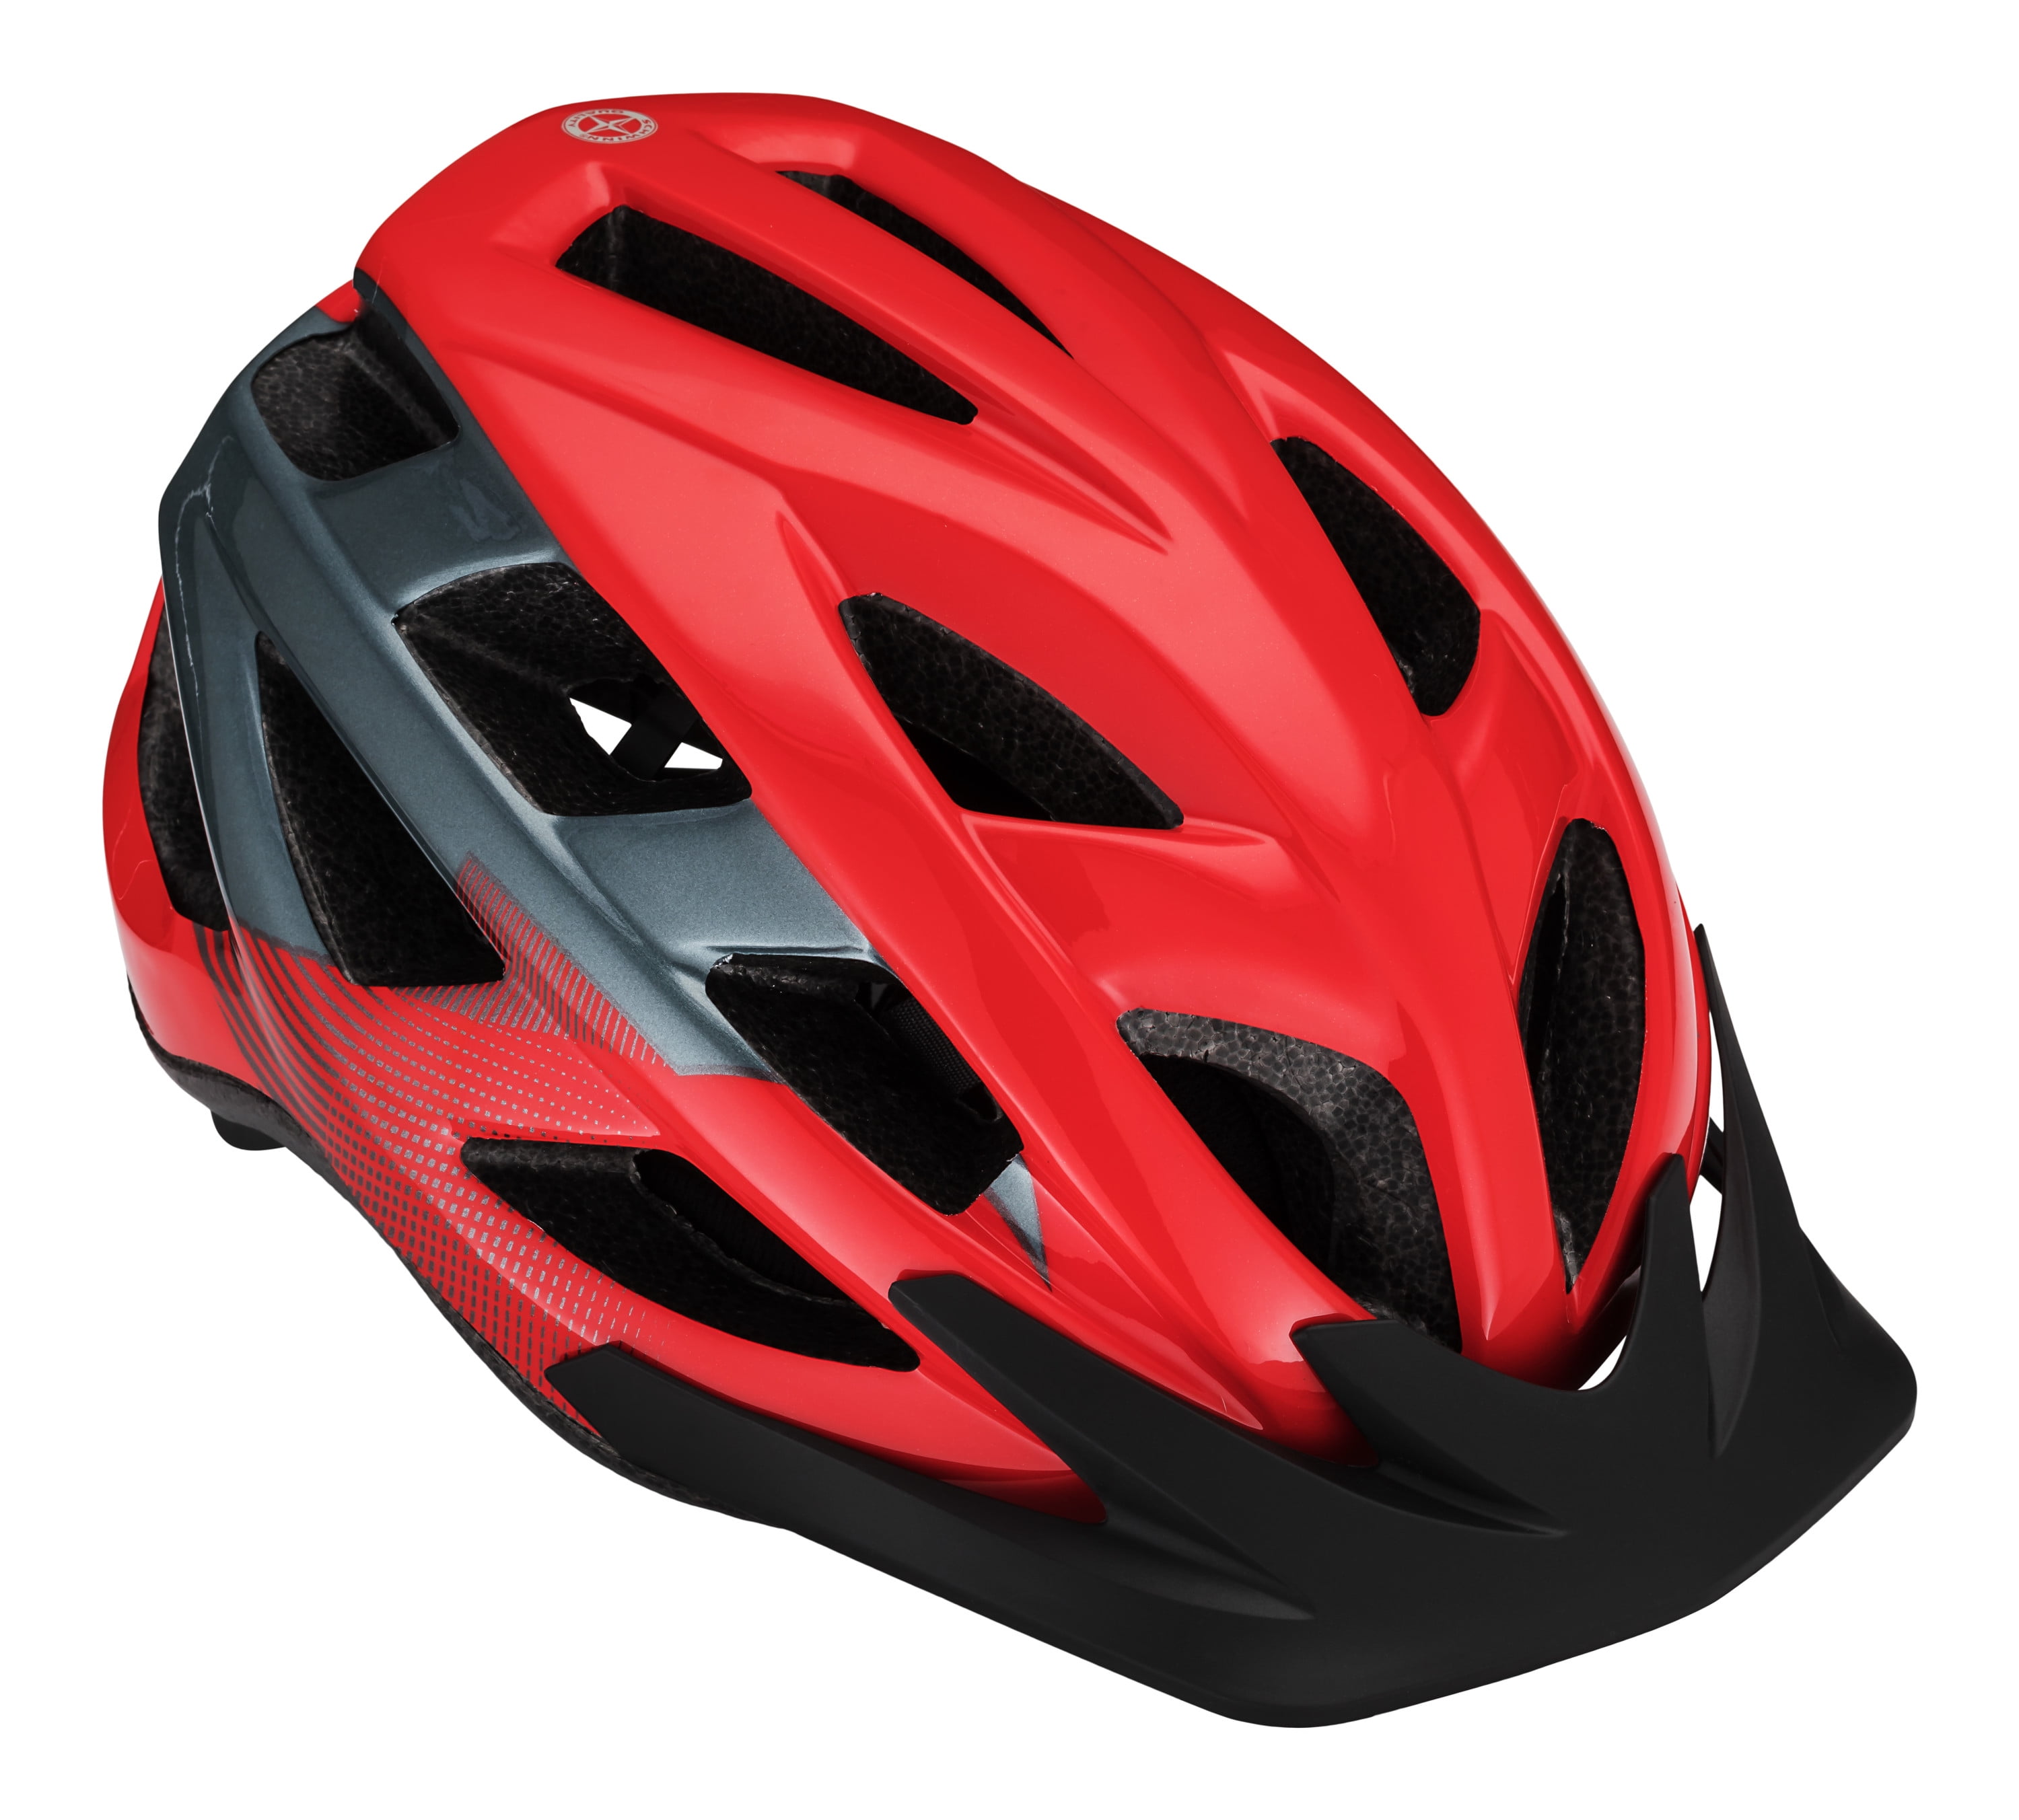 Details about   SCHWINN Breeze Youth Bike Helmet for Boys & Girls Age 8+ NEW Red & Blue 